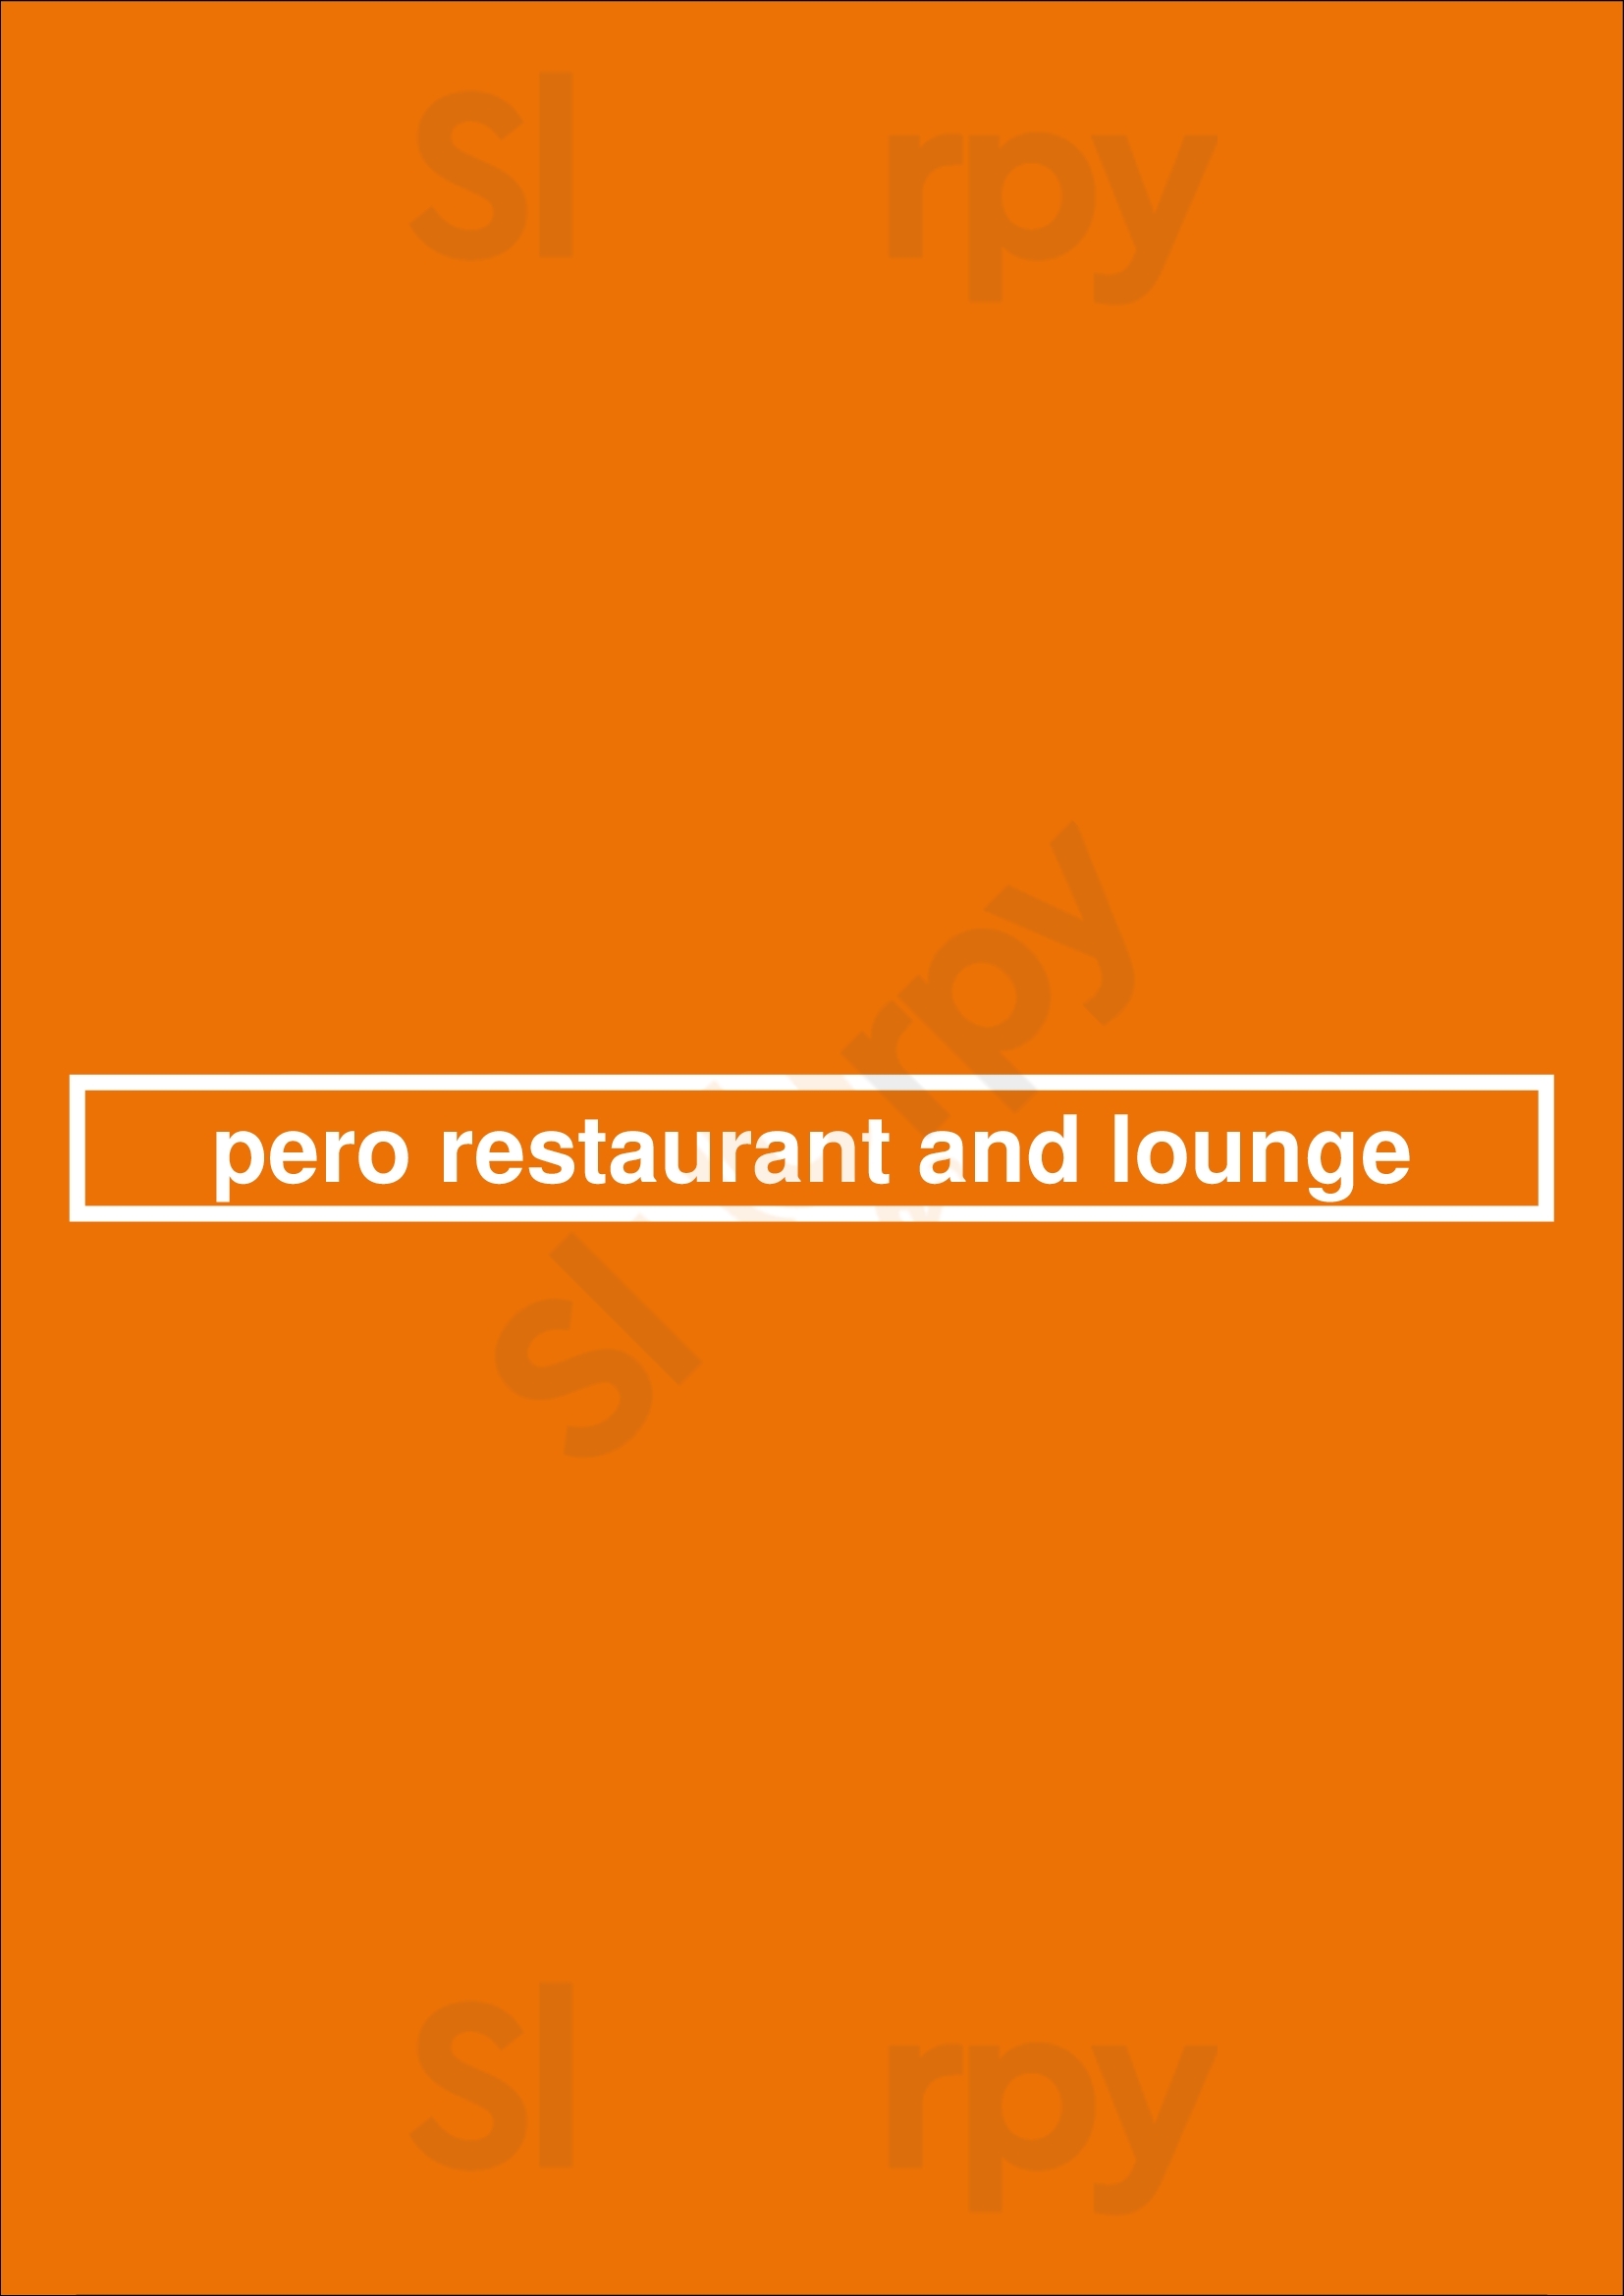 Selam Restaurant & Lounge Toronto Menu - 1